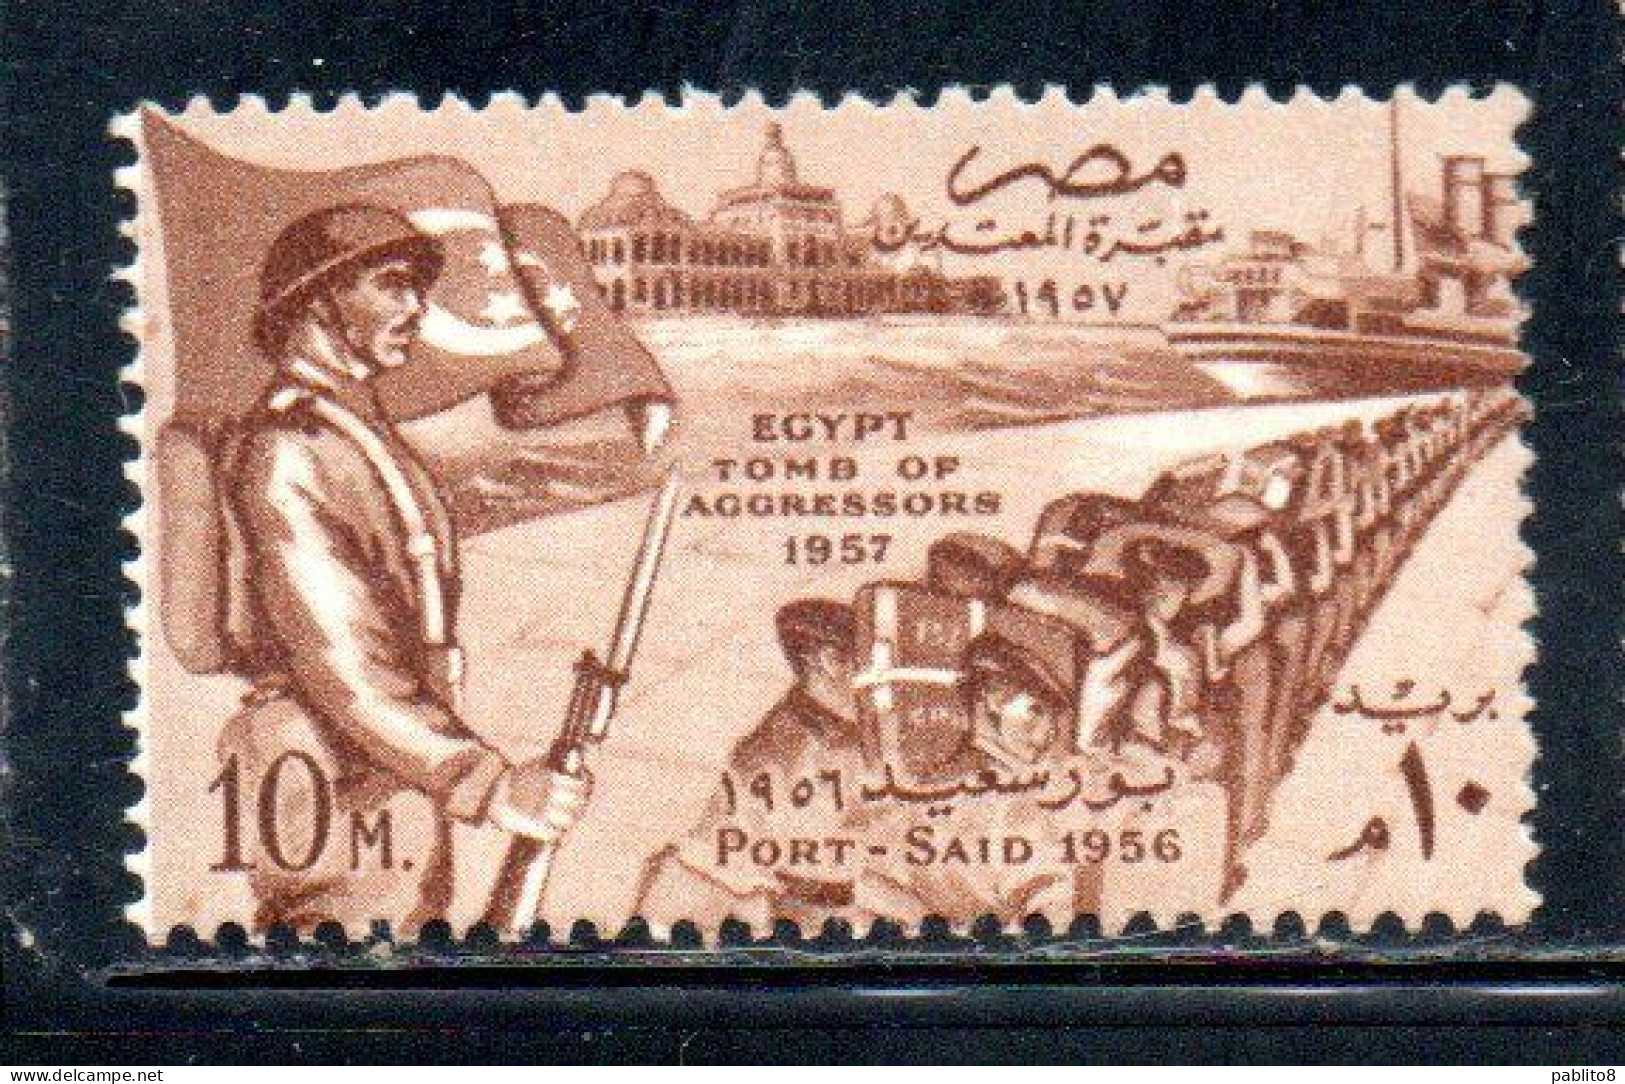 UAR EGYPT EGITTO 1957 TOMB OF AGGRESSORS 1957 PORT SAID 1956 10m MH - Unused Stamps